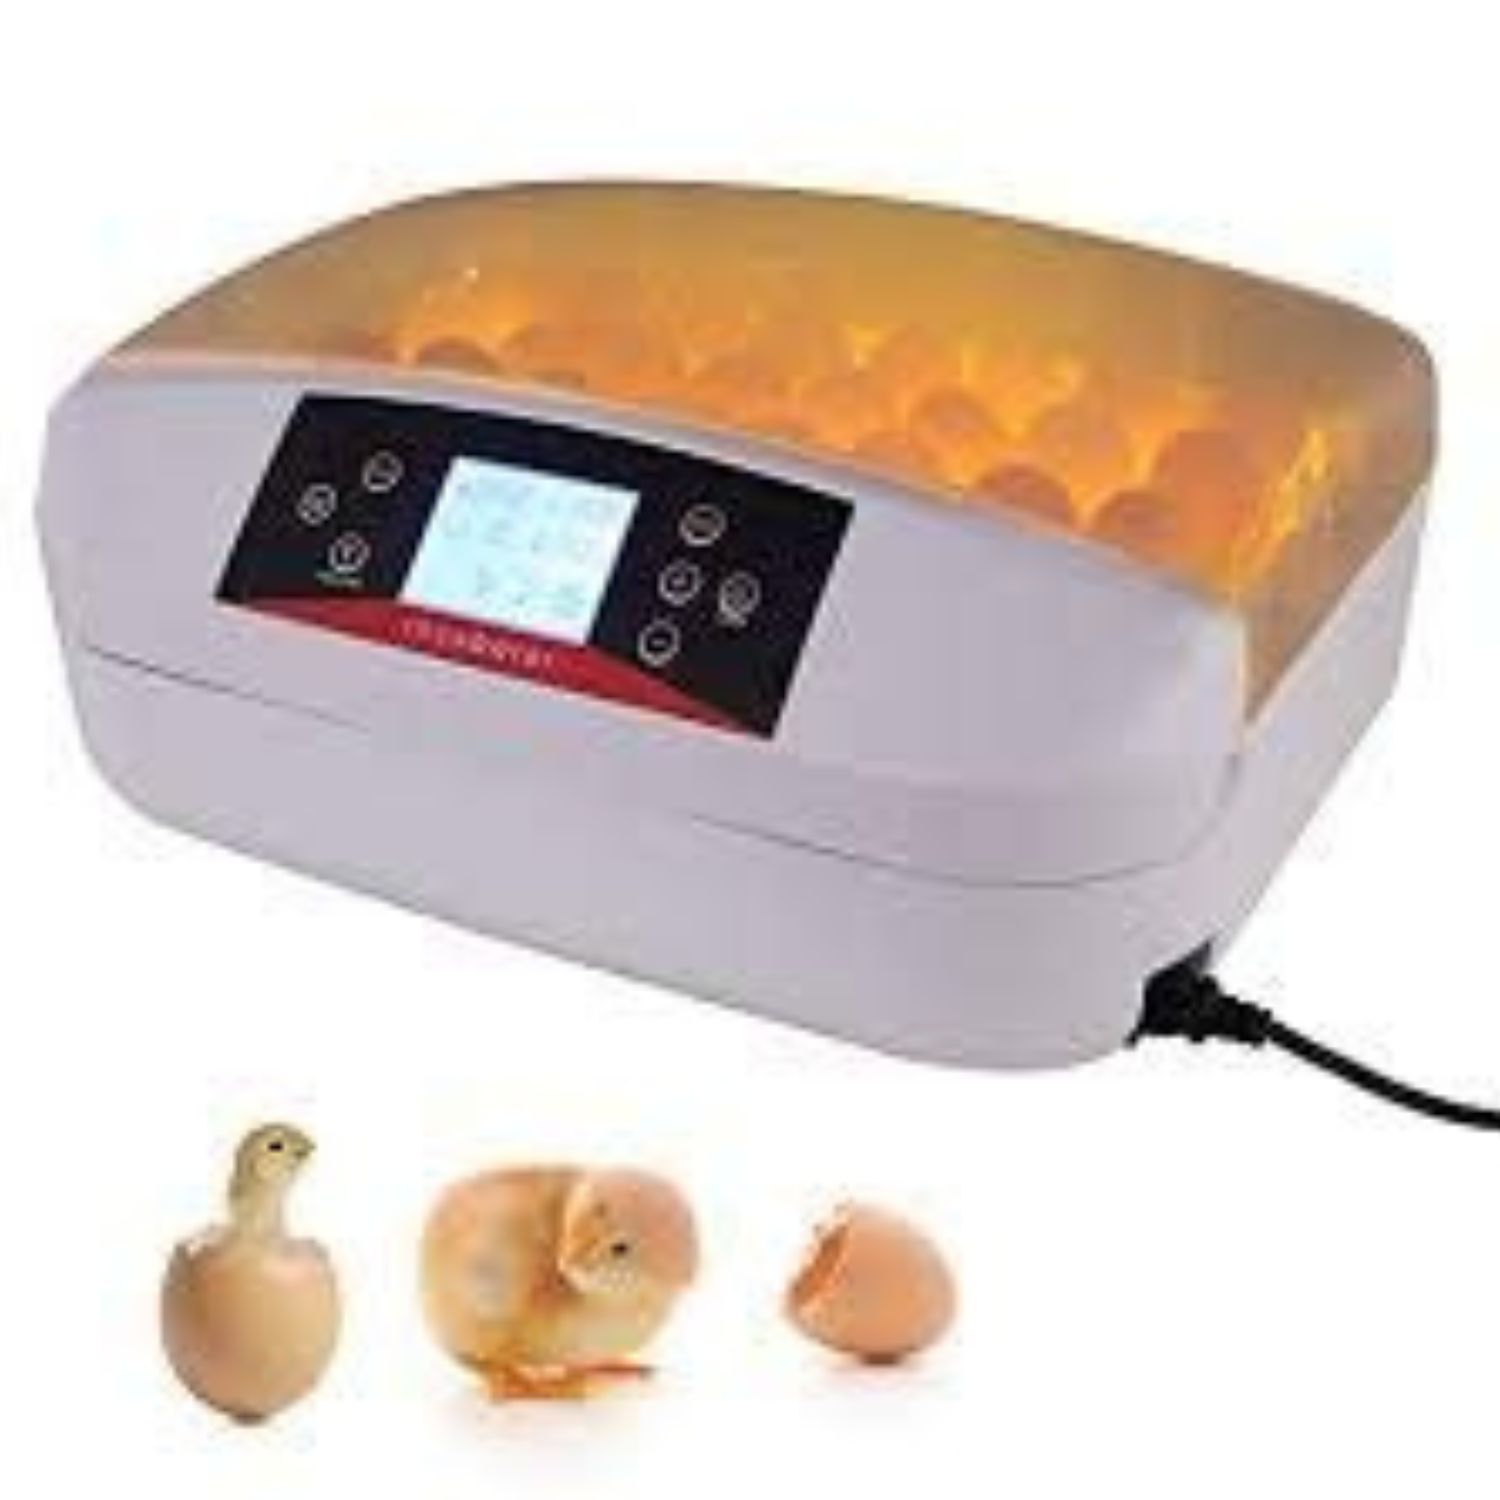 TM&W-Egg incubator digital temperature and humidity controller XM-18D